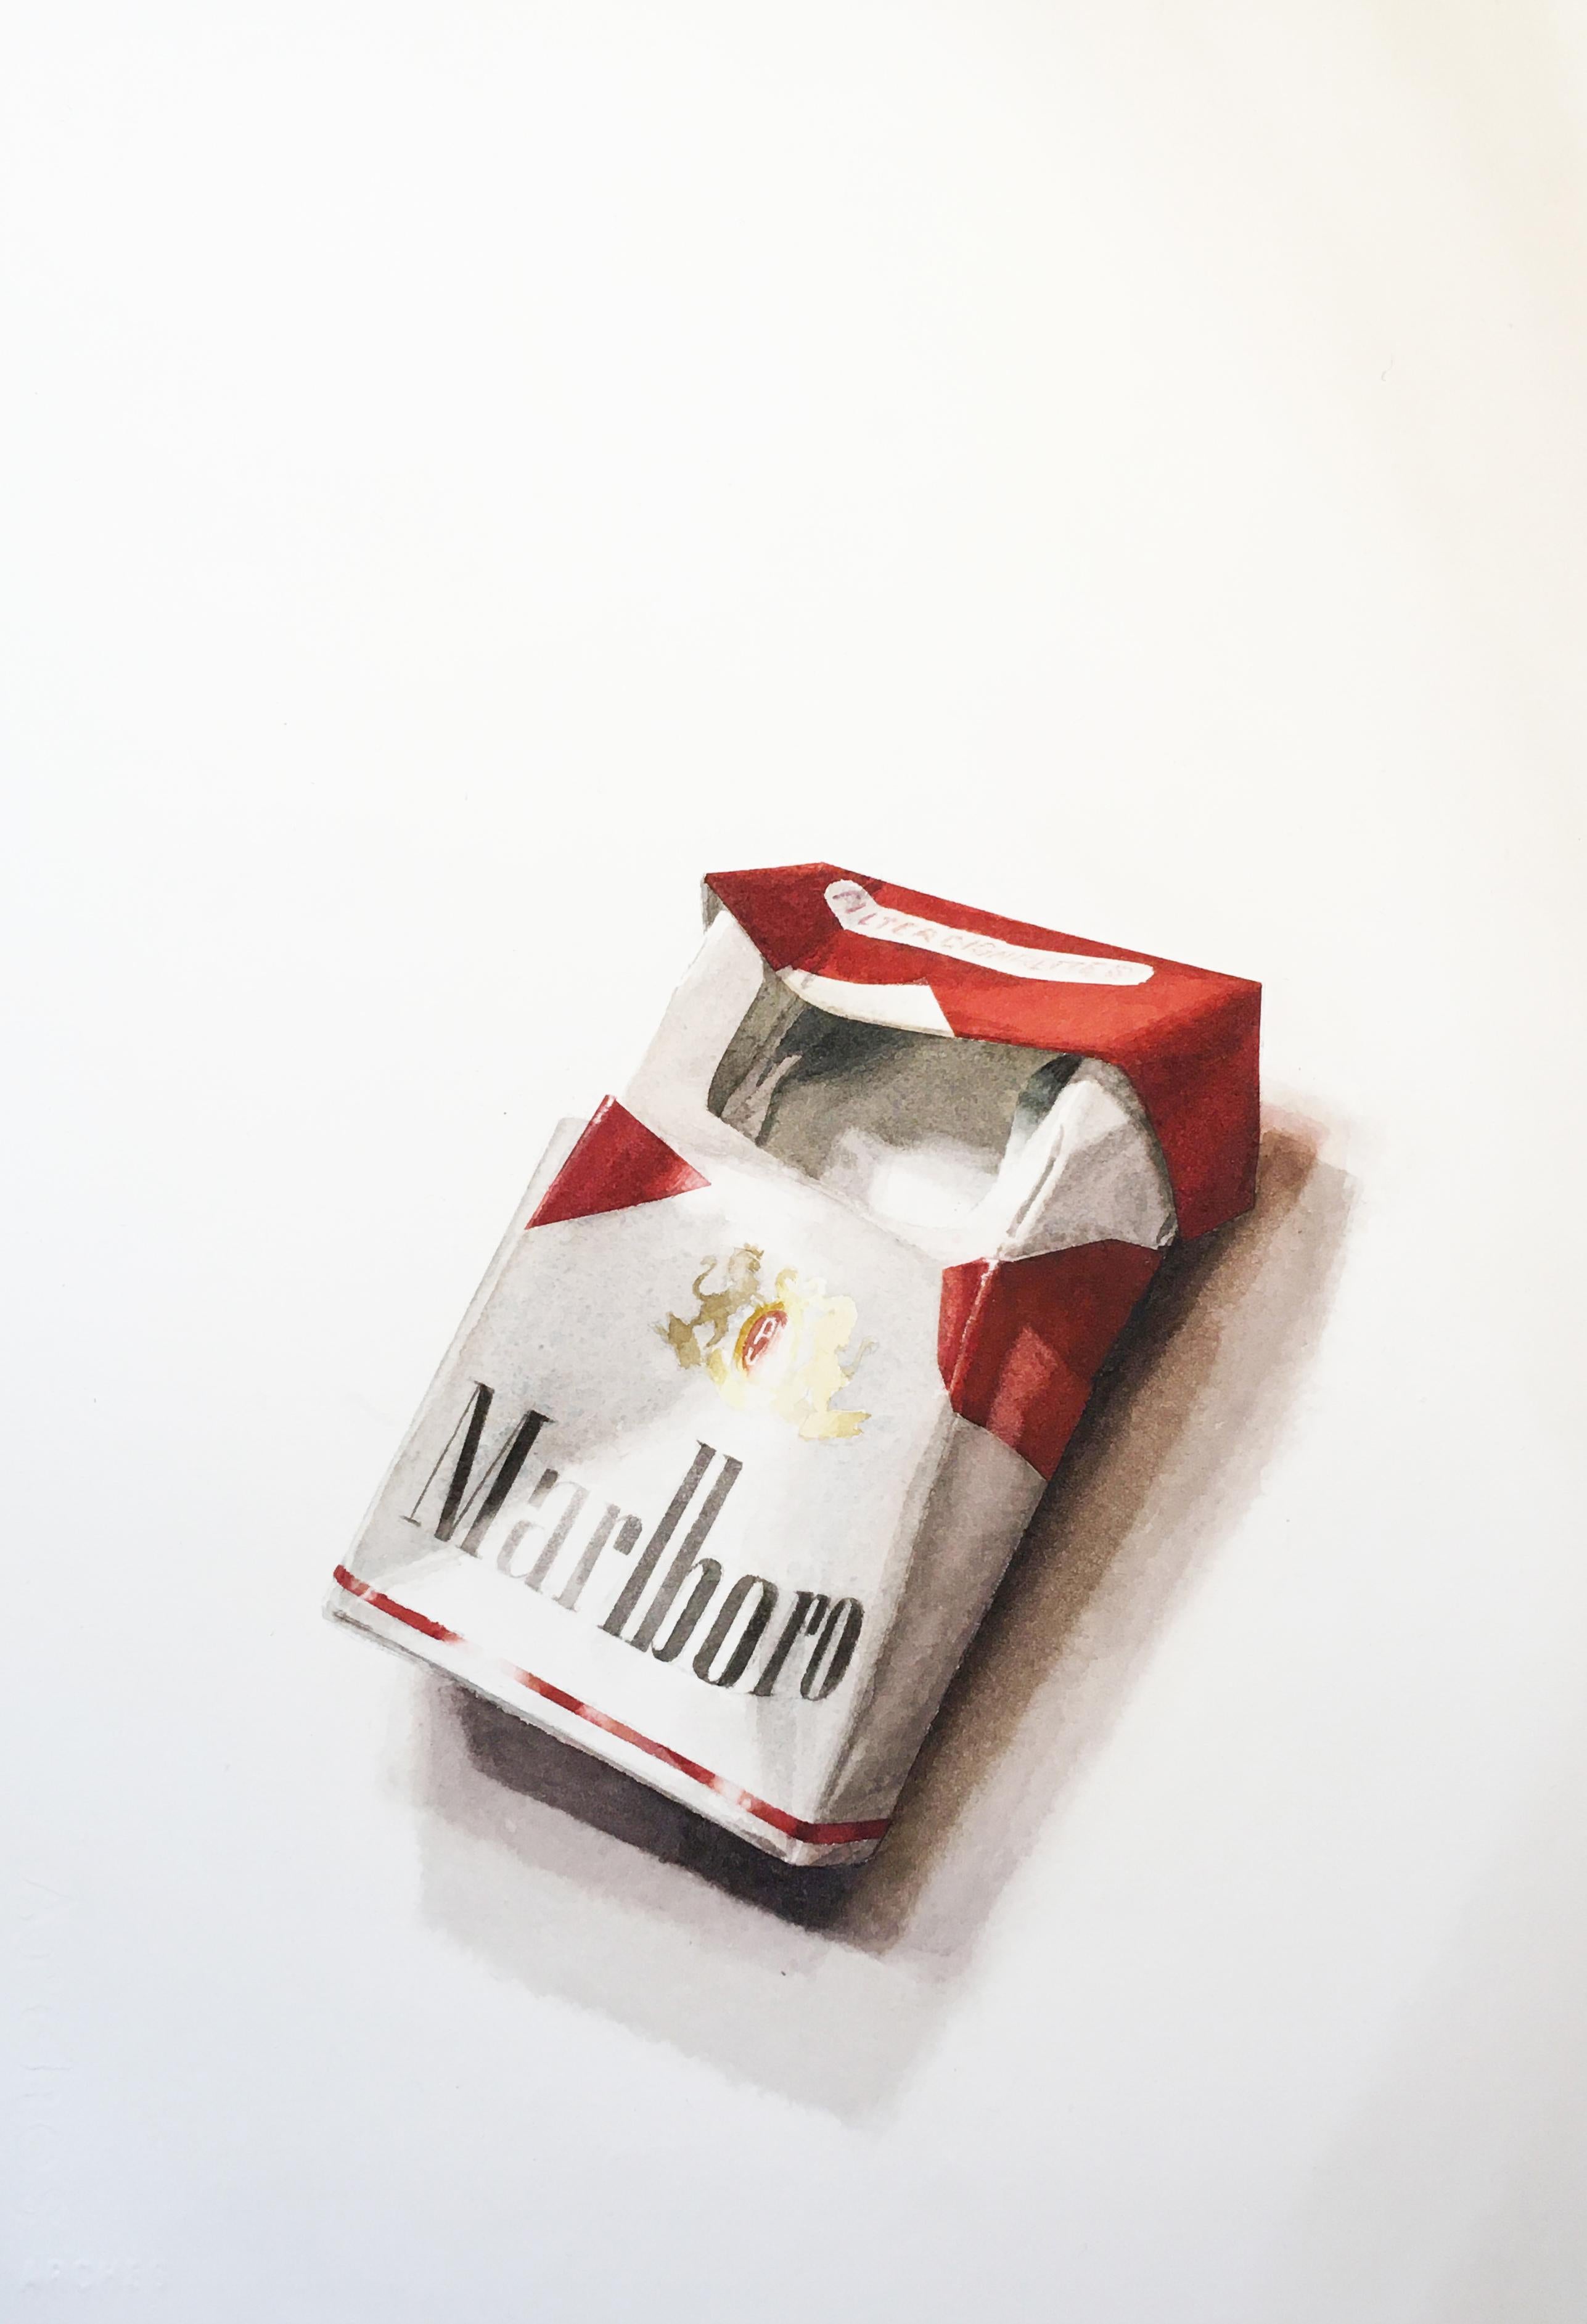 Scott Nelson Foster Still-Life Painting - Marlboro III (Photo-Realist Pop Art Still Life Painting of a Red Cigarette Pack)